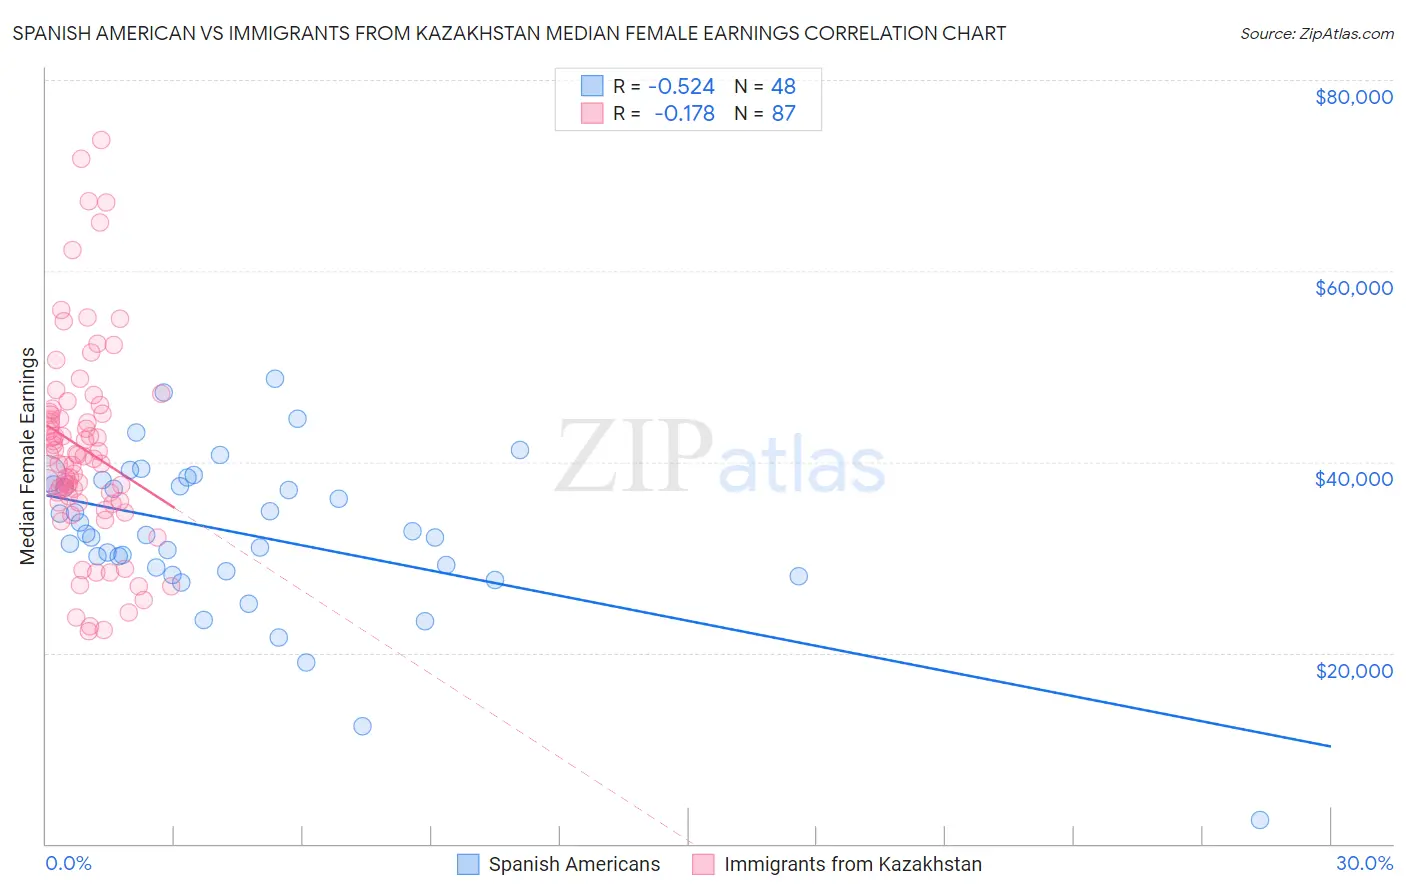 Spanish American vs Immigrants from Kazakhstan Median Female Earnings